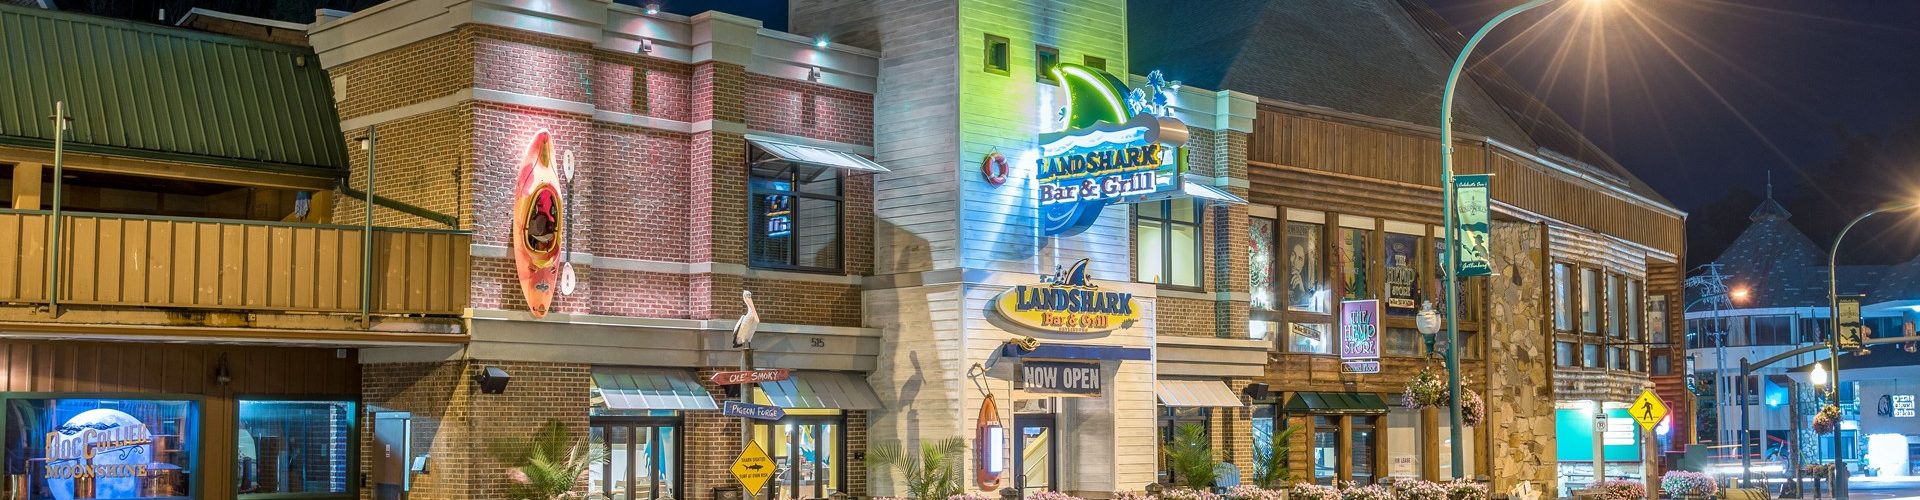 Jimmy Buffett's LandShark Bar & Grill is one of three restaurants coming to the Branson Landing